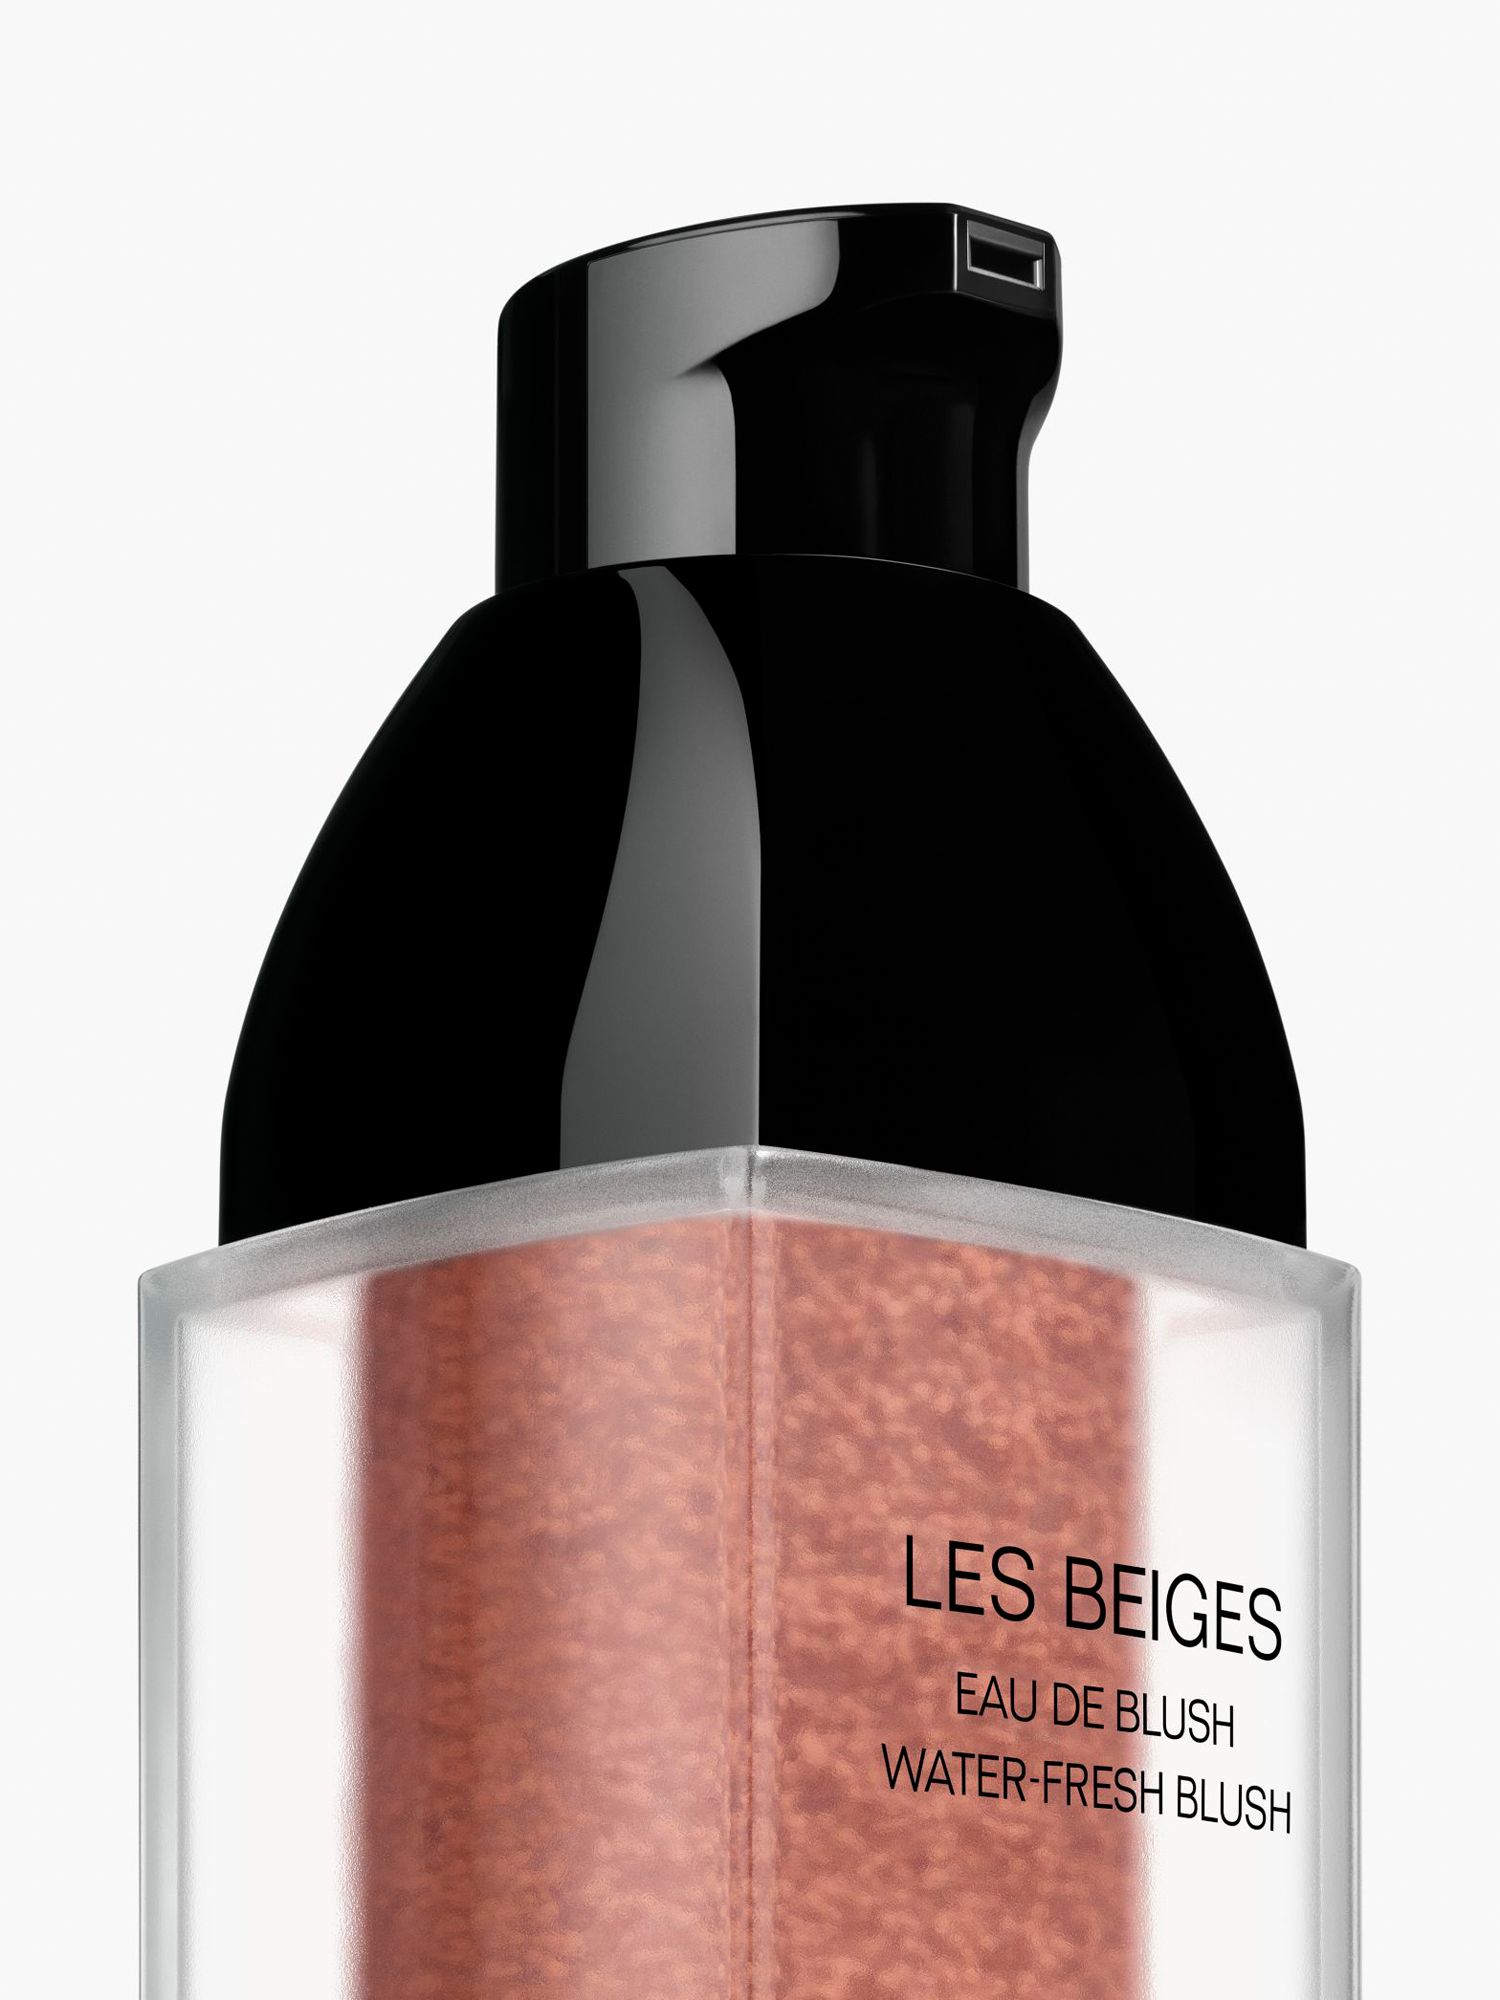 CHANEL Les Beiges Water-Fresh Blush, Light Peach at John Lewis